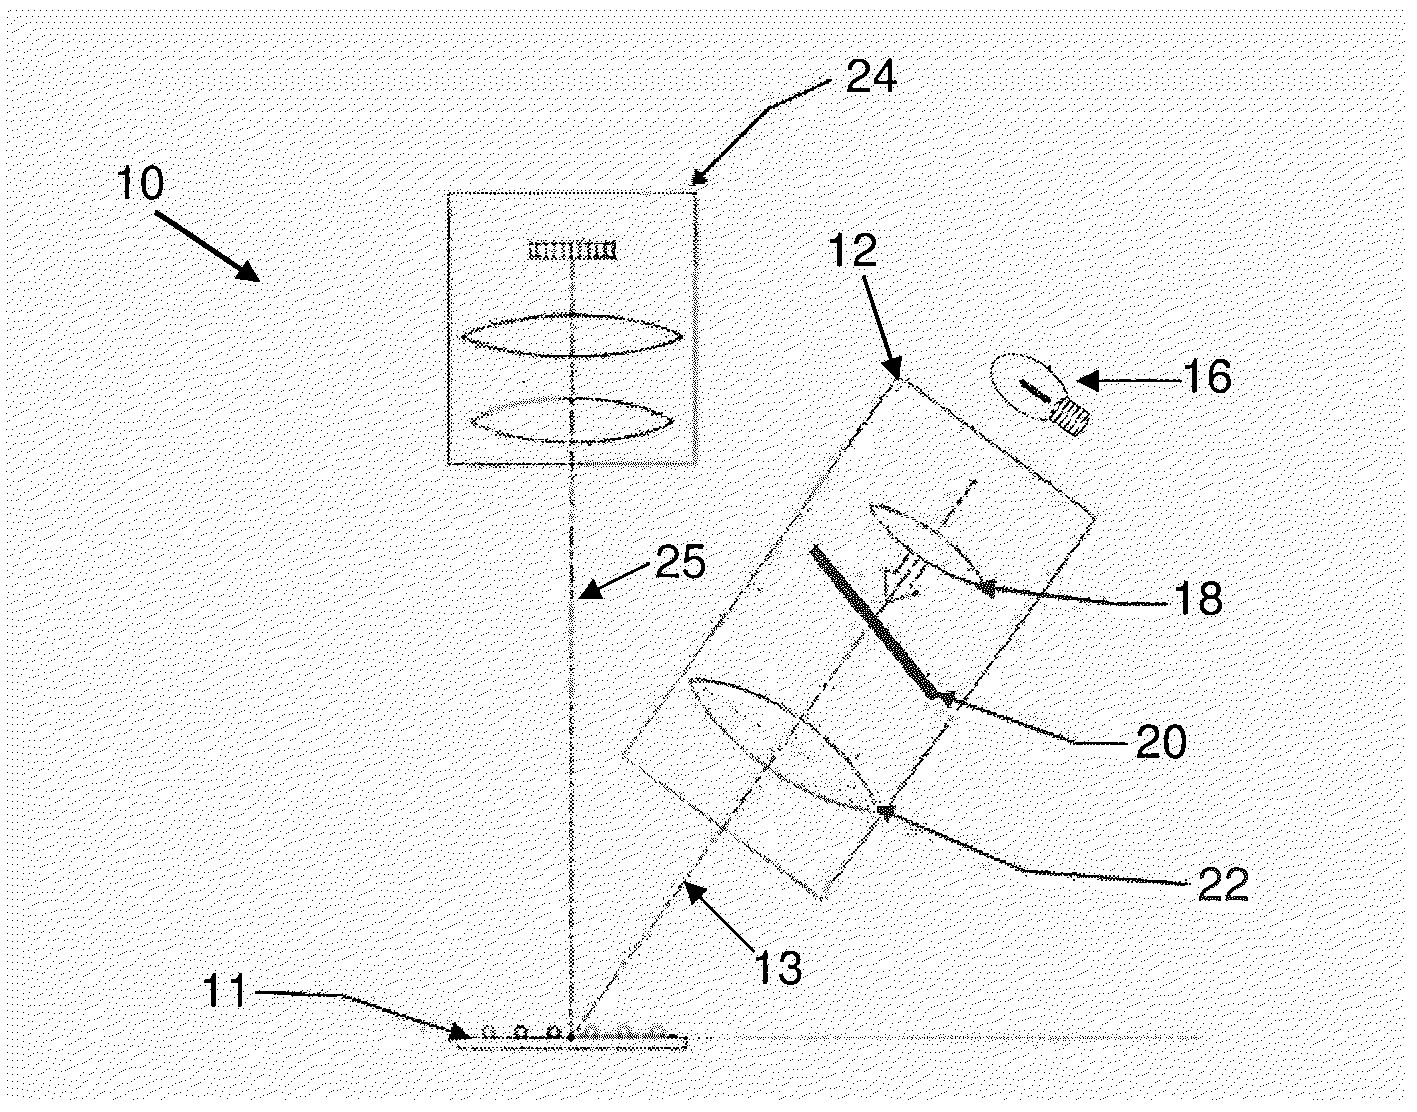 Asymmetric pattern projection apparatus